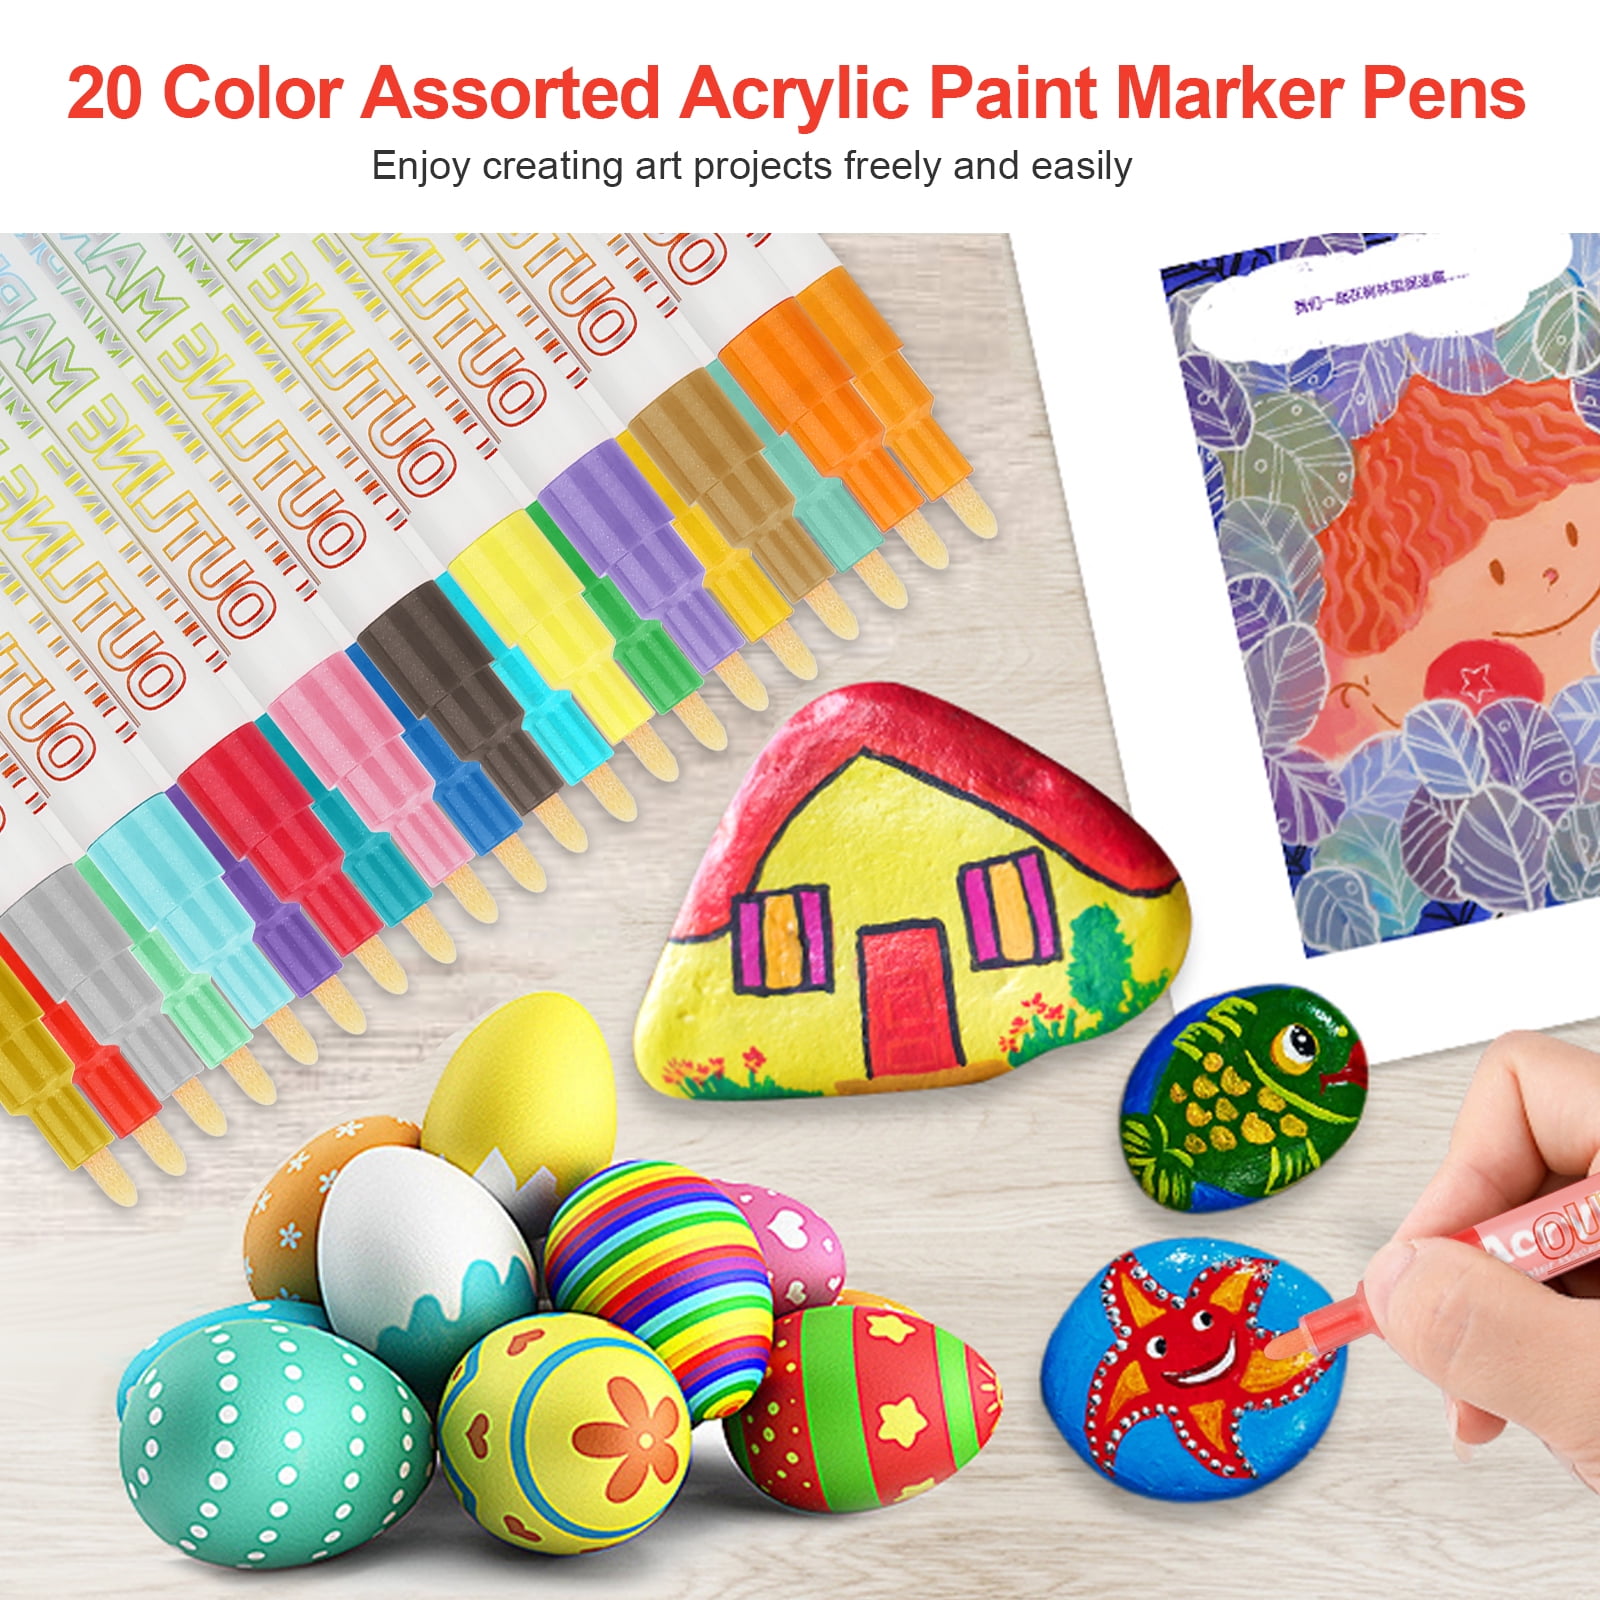 QBIX Acrylic Paint Marker Pens 2-4 mm – 12 pcs Pen Set for Rock Painting,  DIY Craft Projects, Ceramic, Glass, Canvas, Wood, Metal – Ultimate Paint